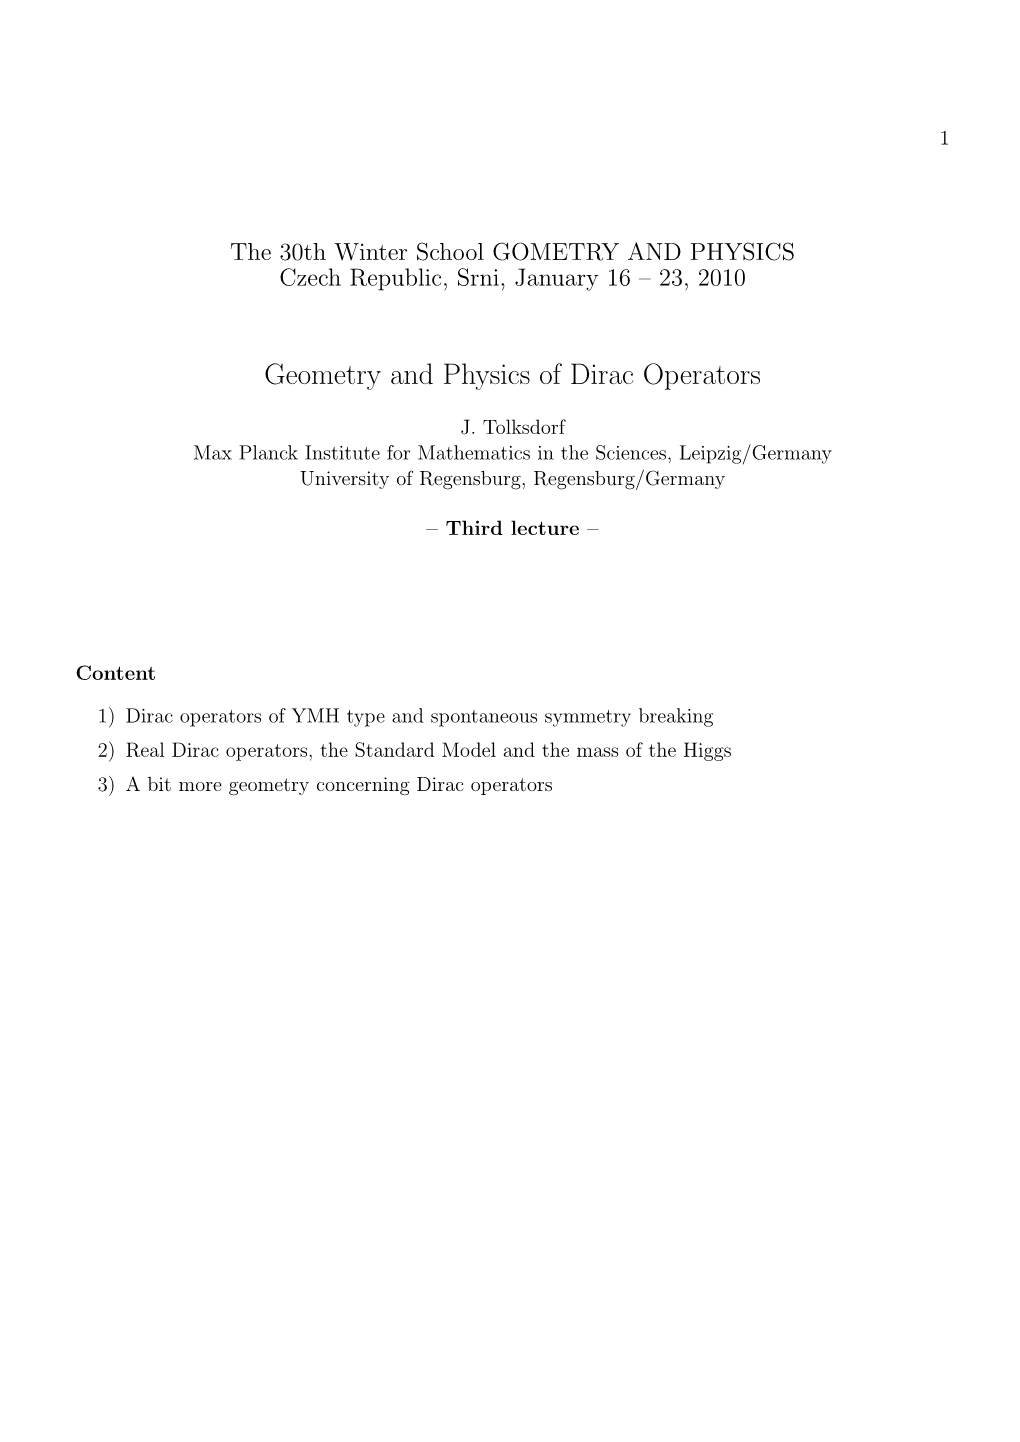 Geometry and Physics of Dirac Operators